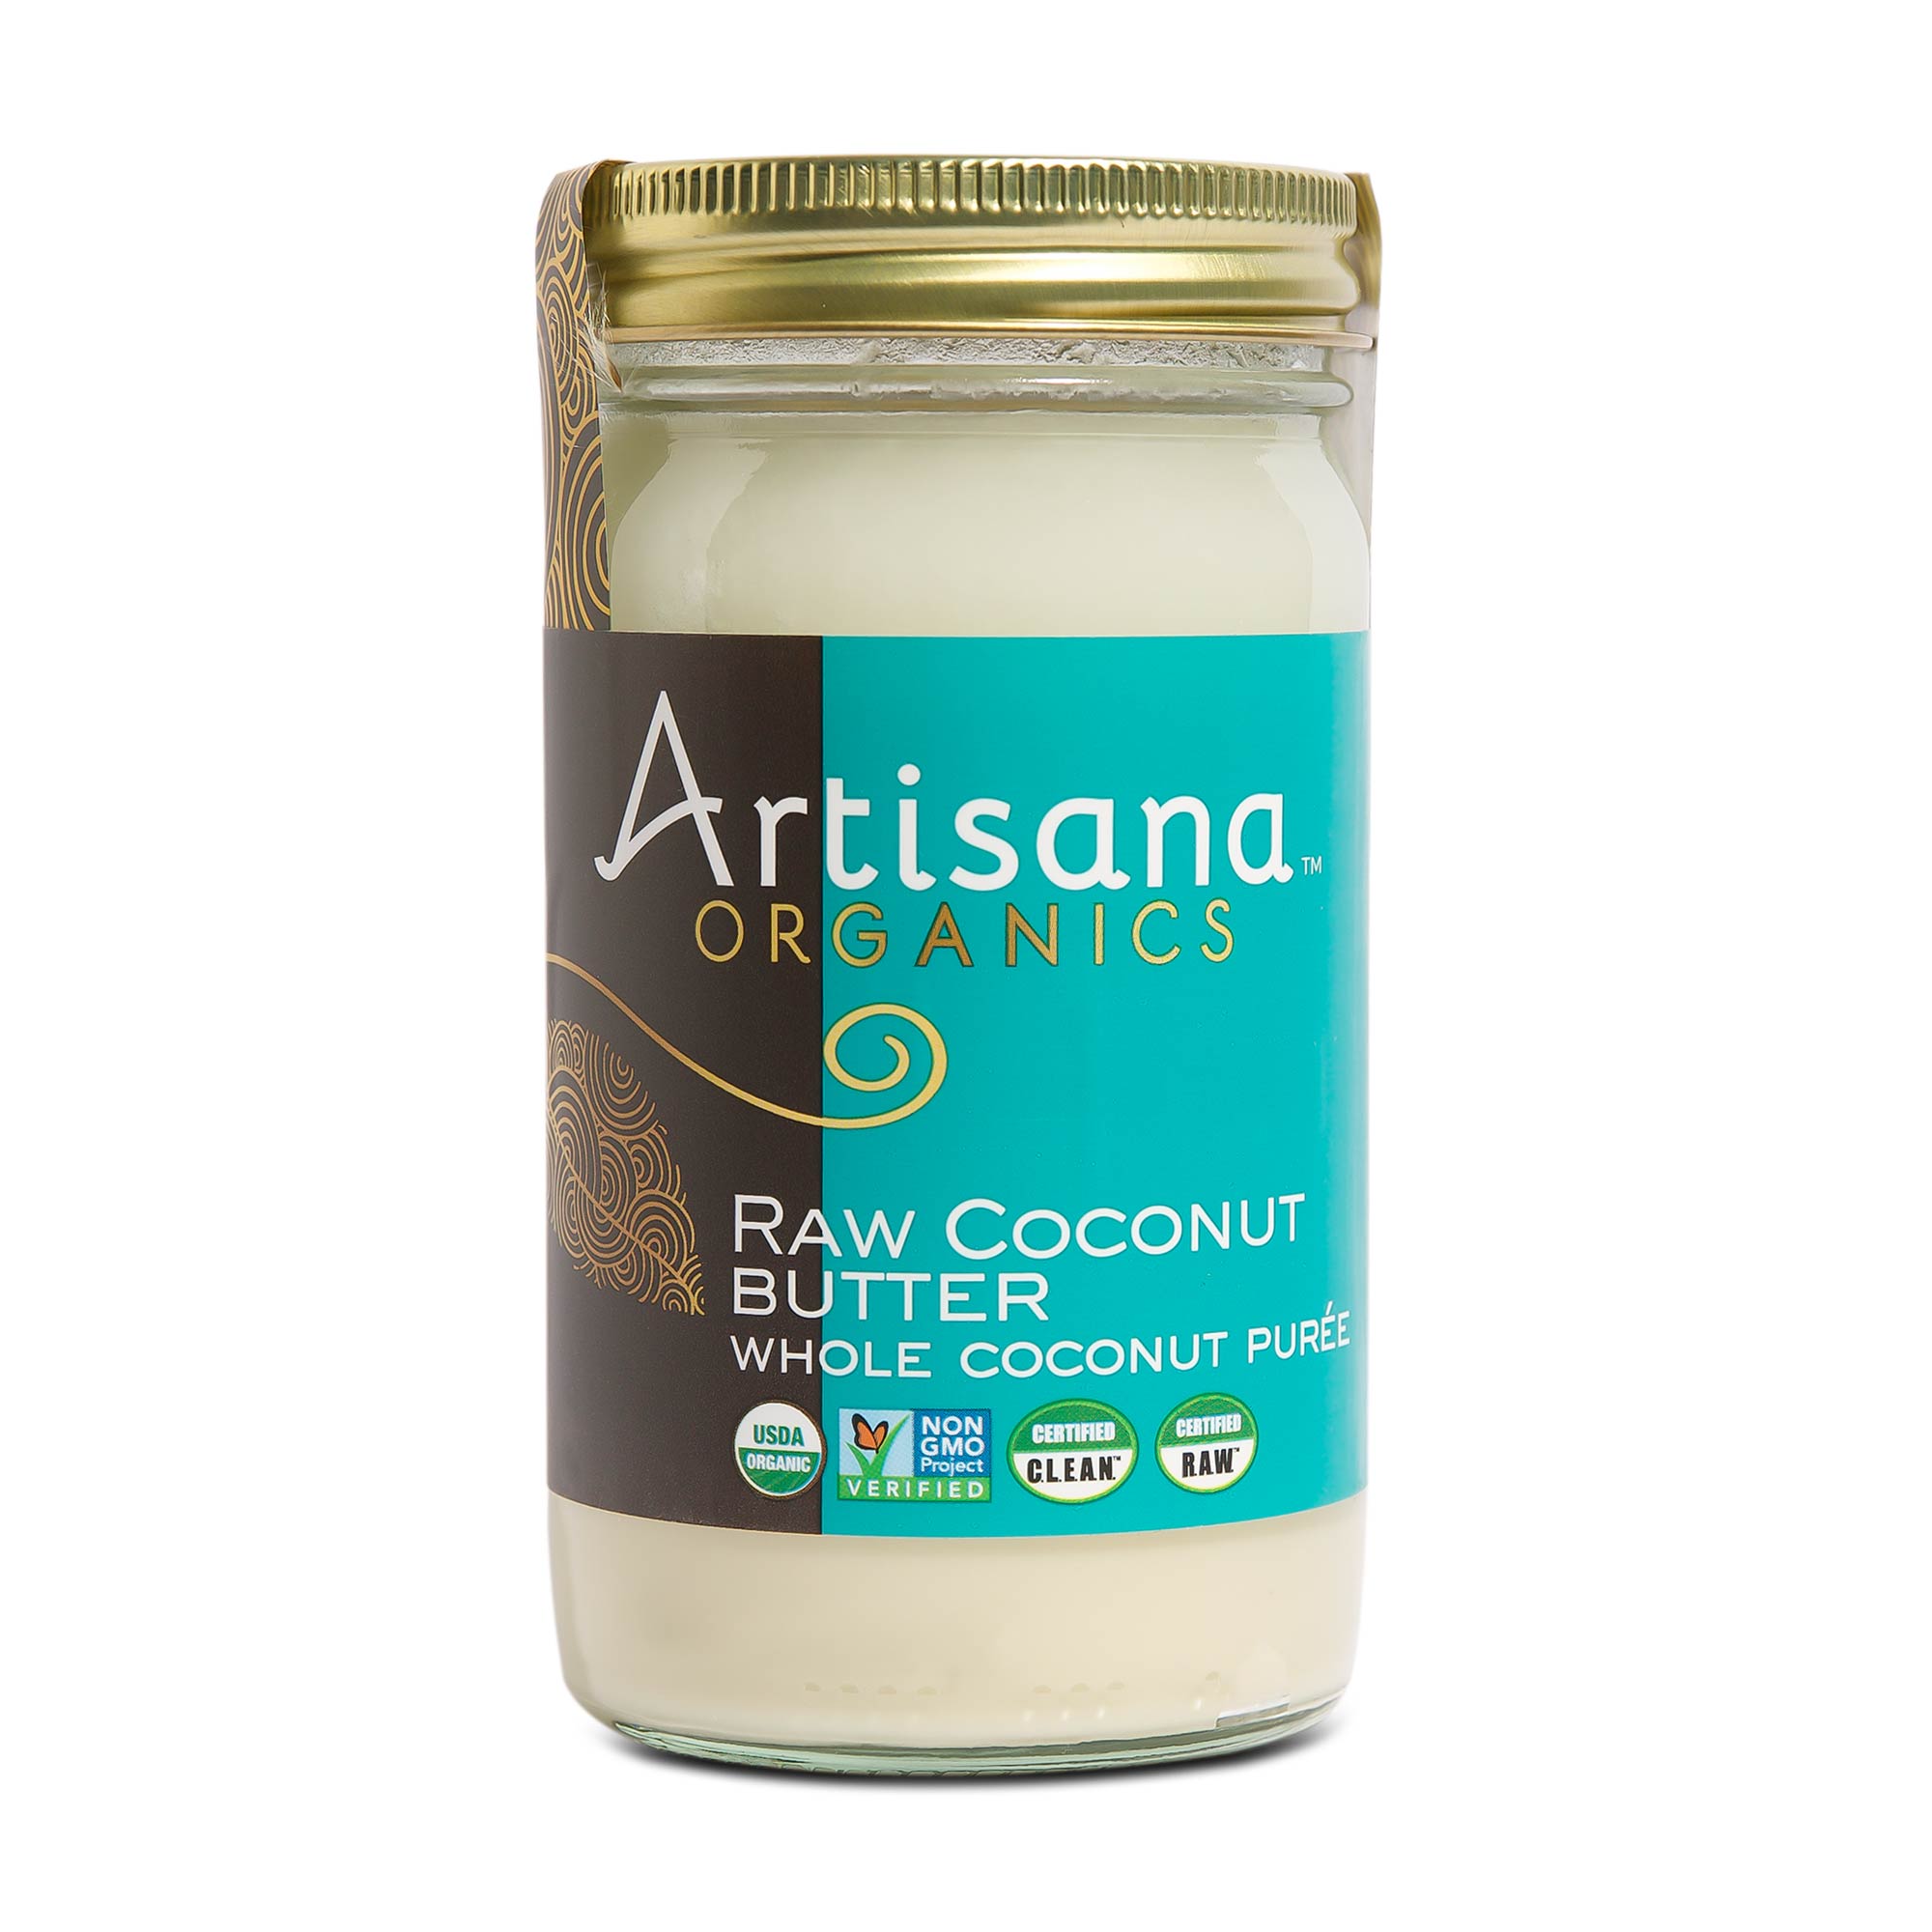 14 oz jar of Raw Coconut Butter Whole Coconut Purée.